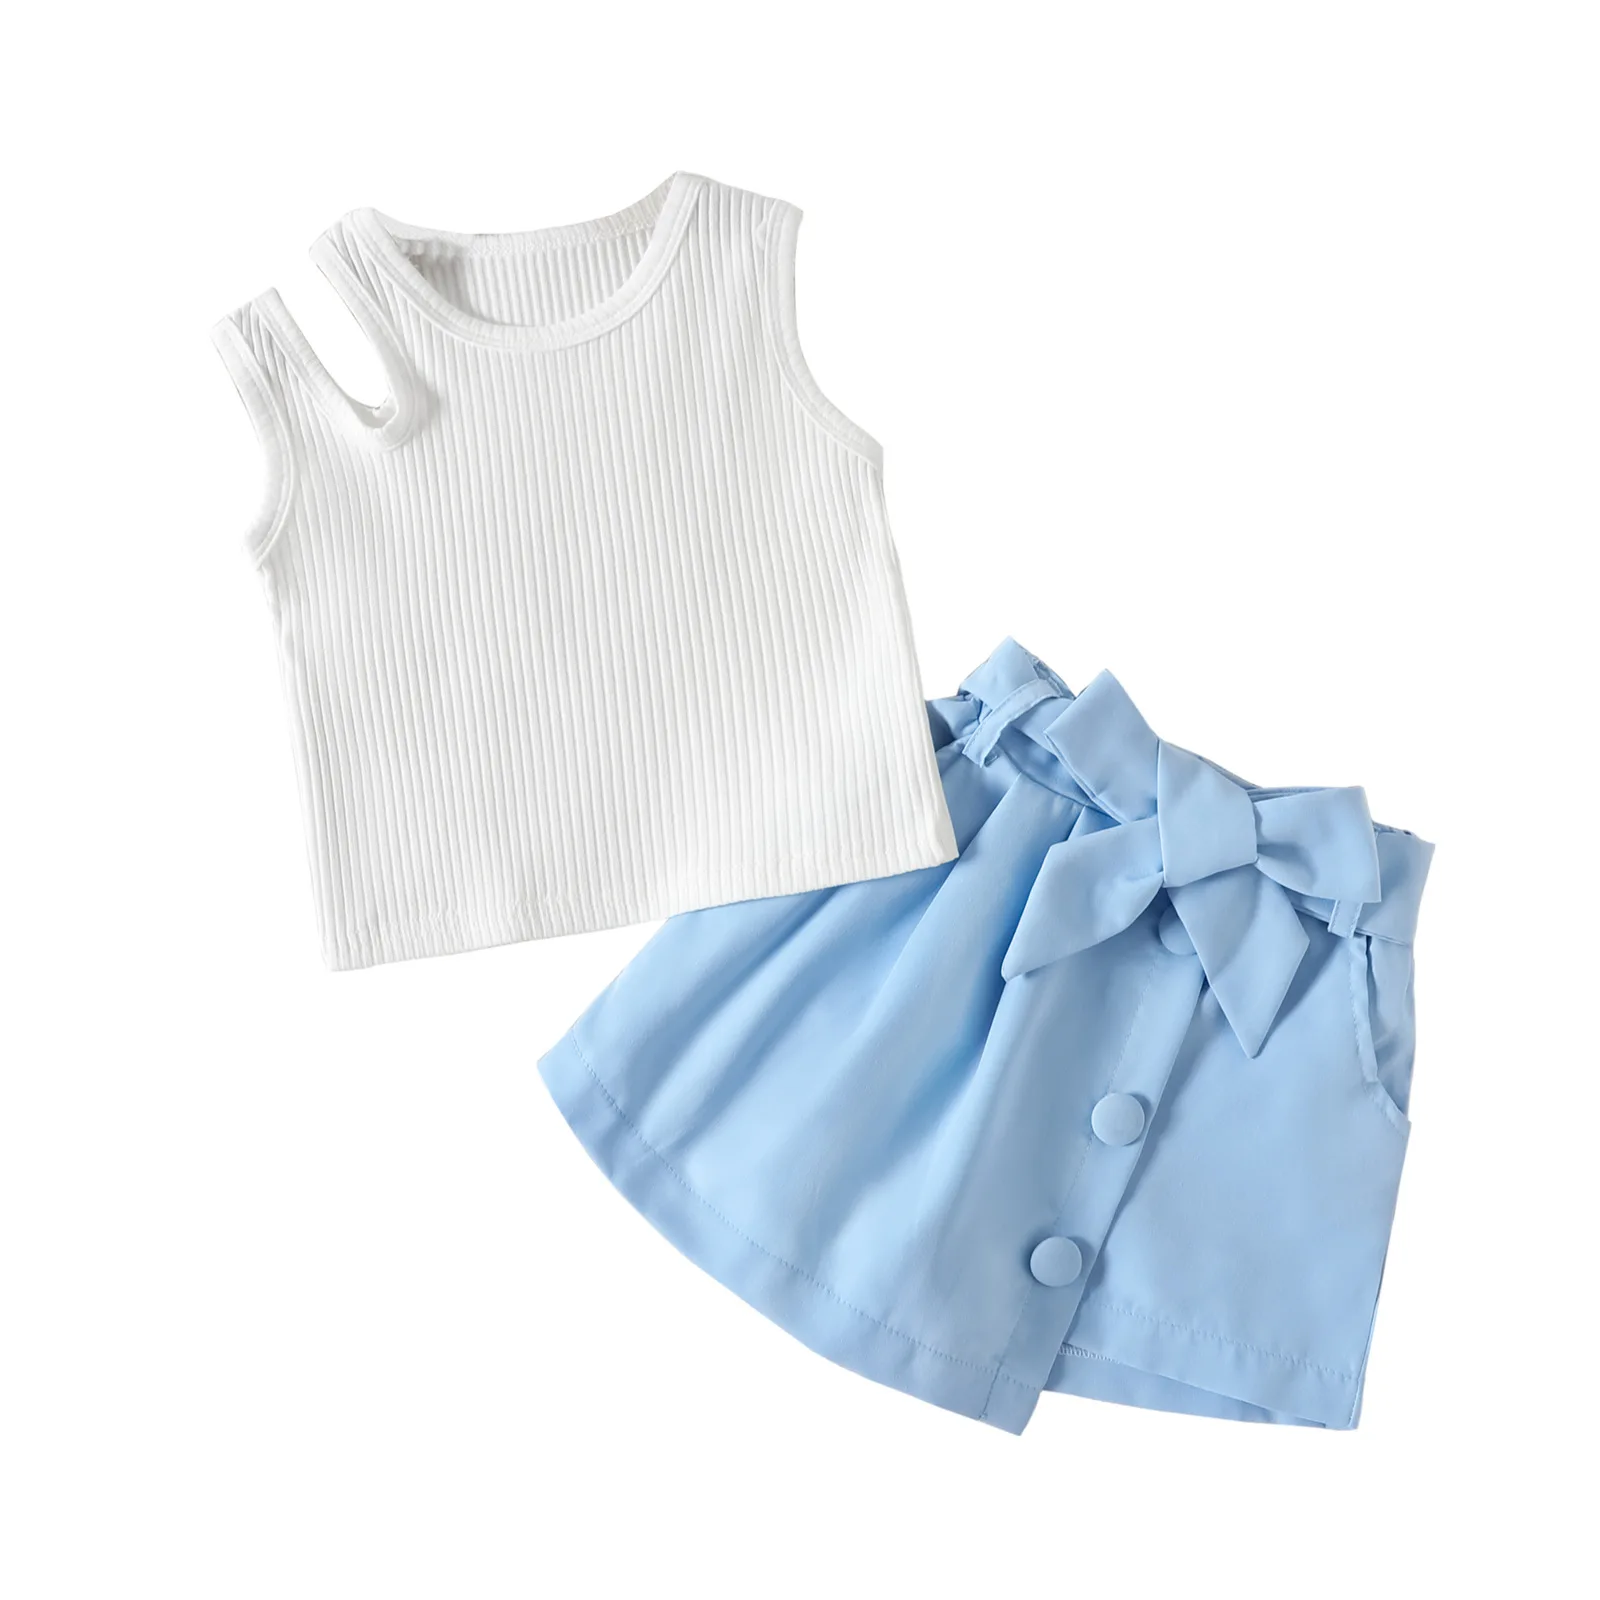 Korean style toddler baby girls 2pcs clothing sets summer girl's irregular off shoulder tank top shorts kids outfits